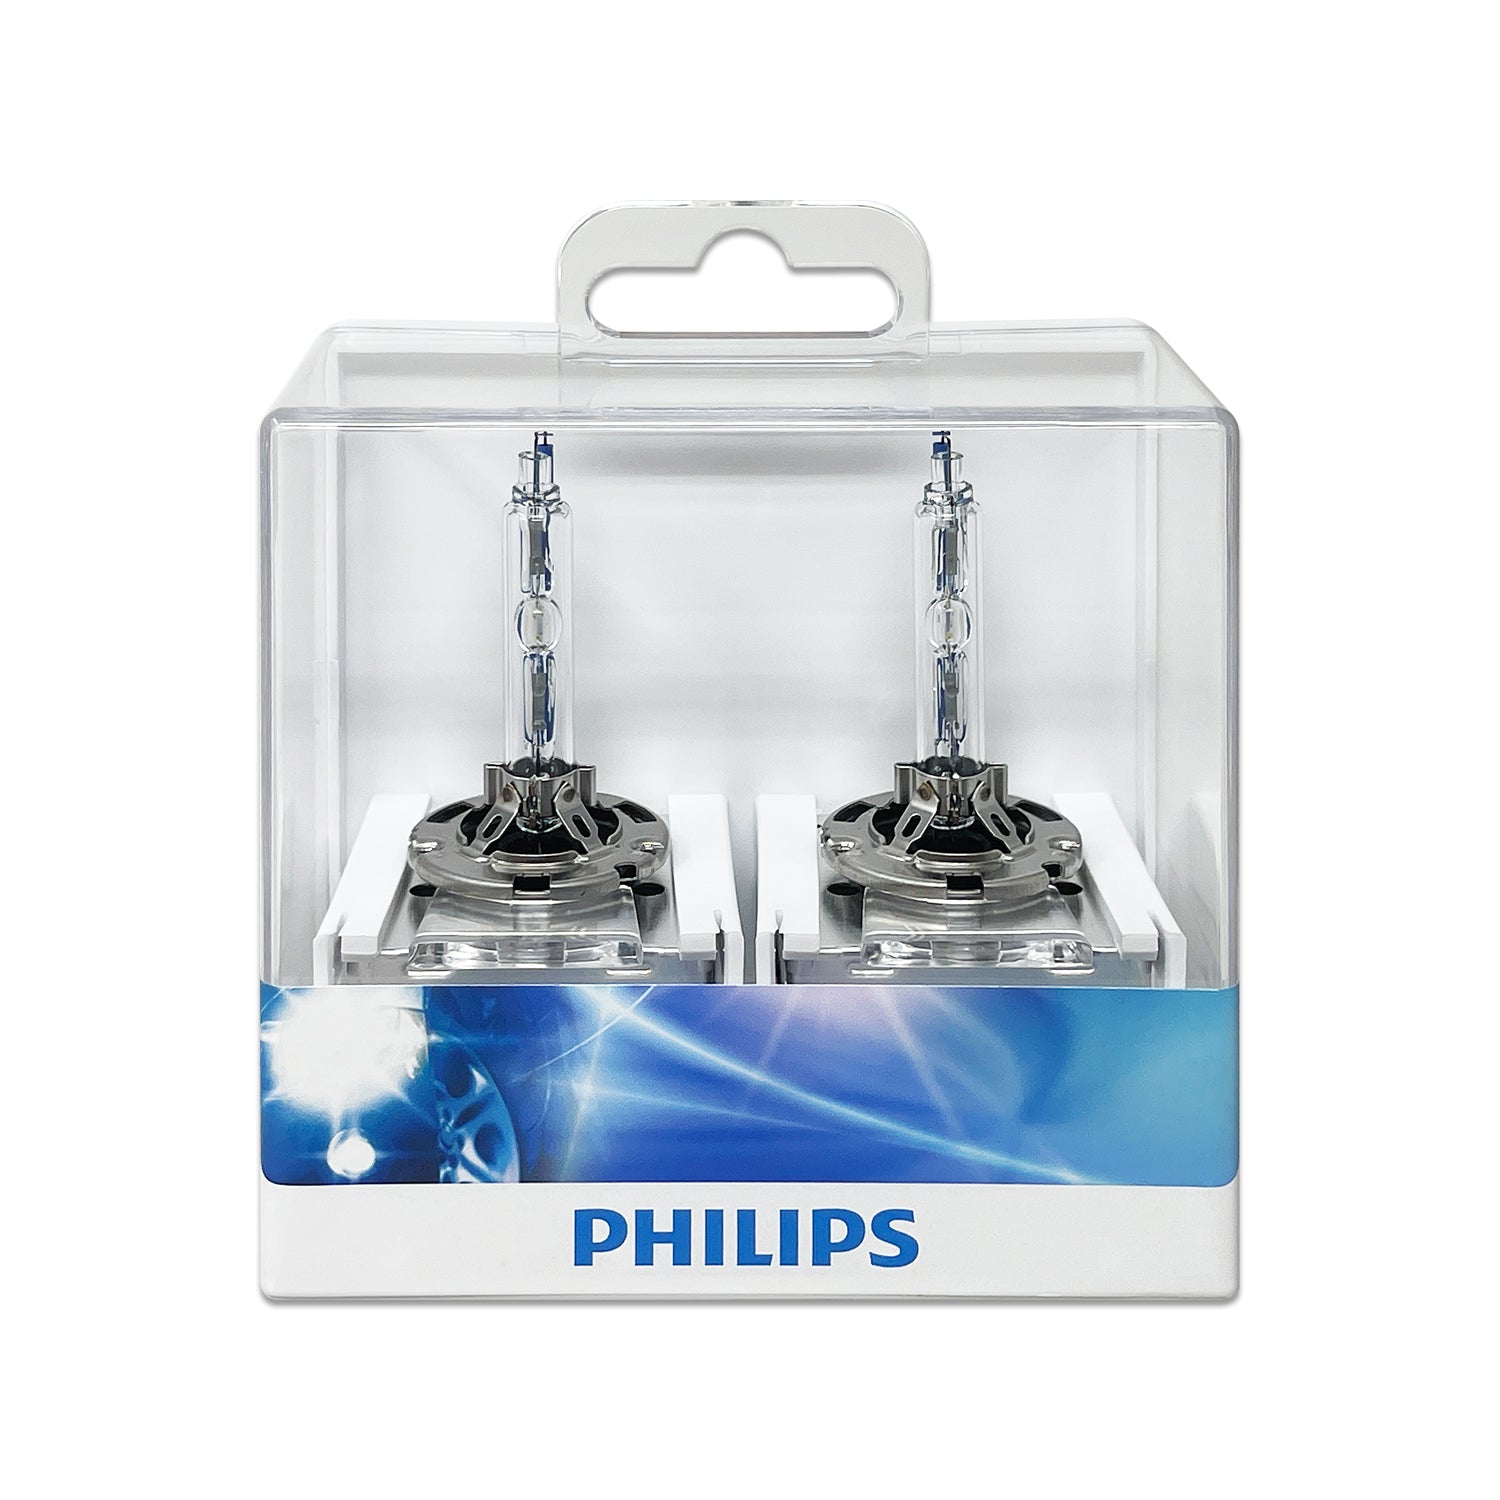 Philips Xenstart D1s 35w bulb